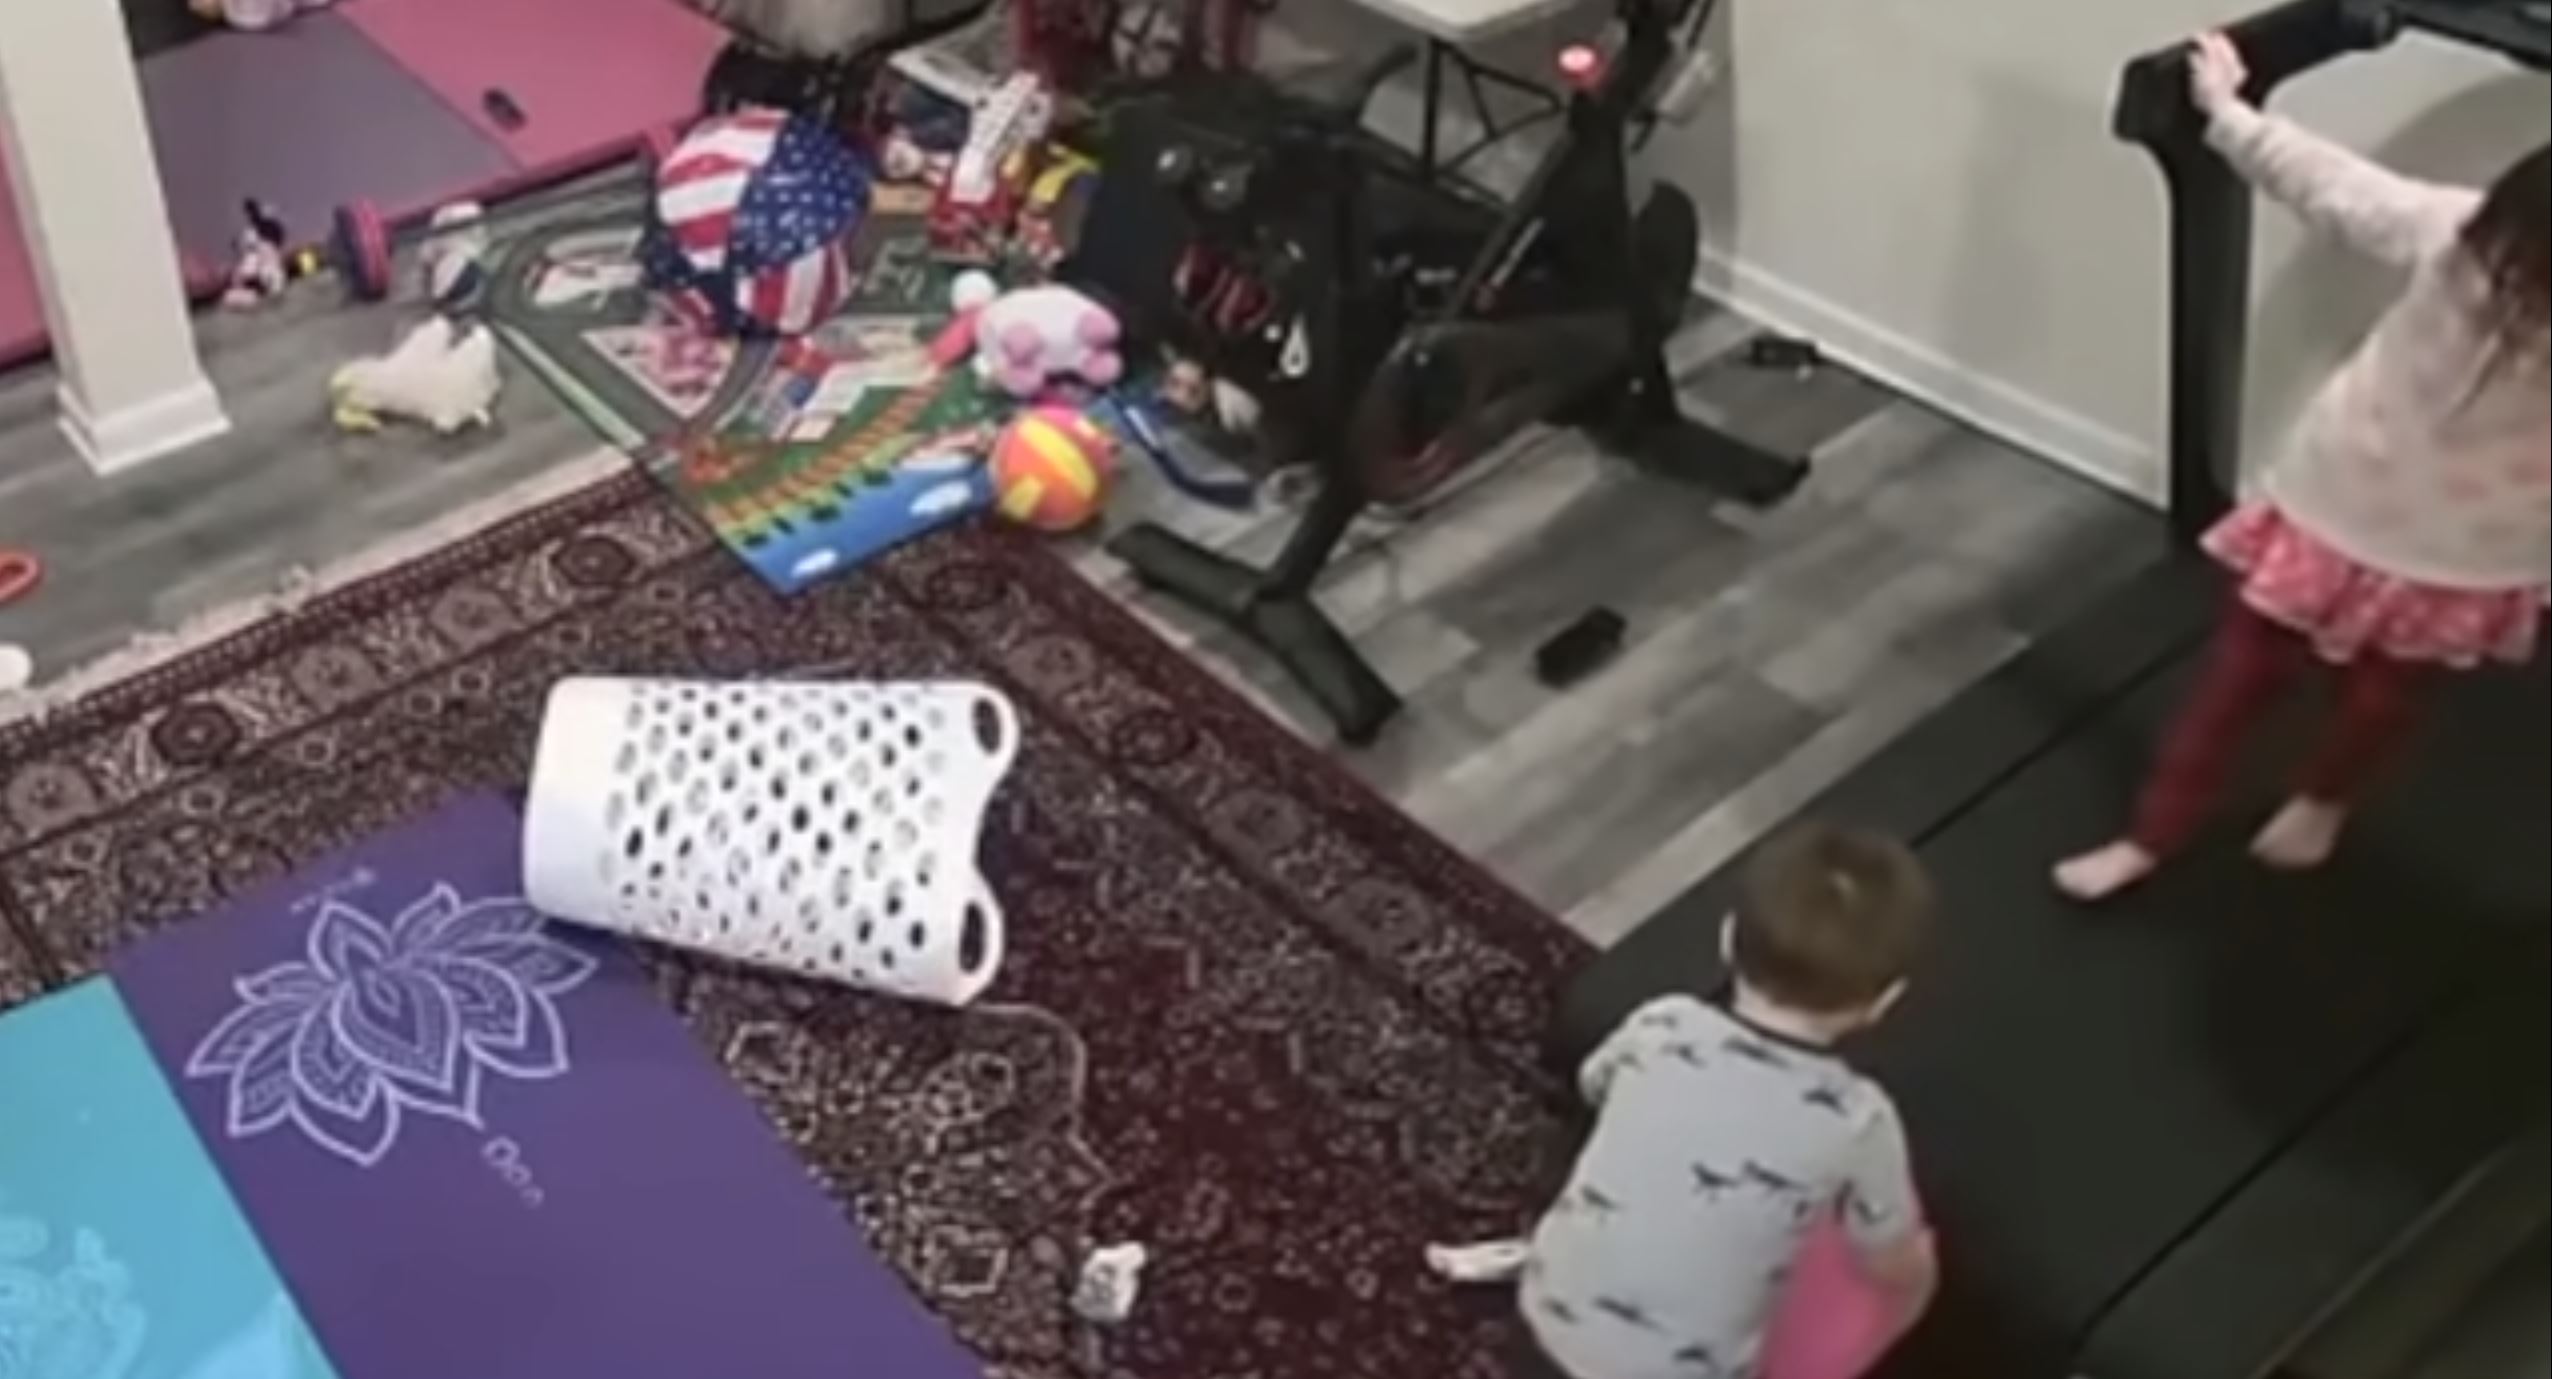 VIDEO: After child dies, US regulator warns about Peloton treadmill